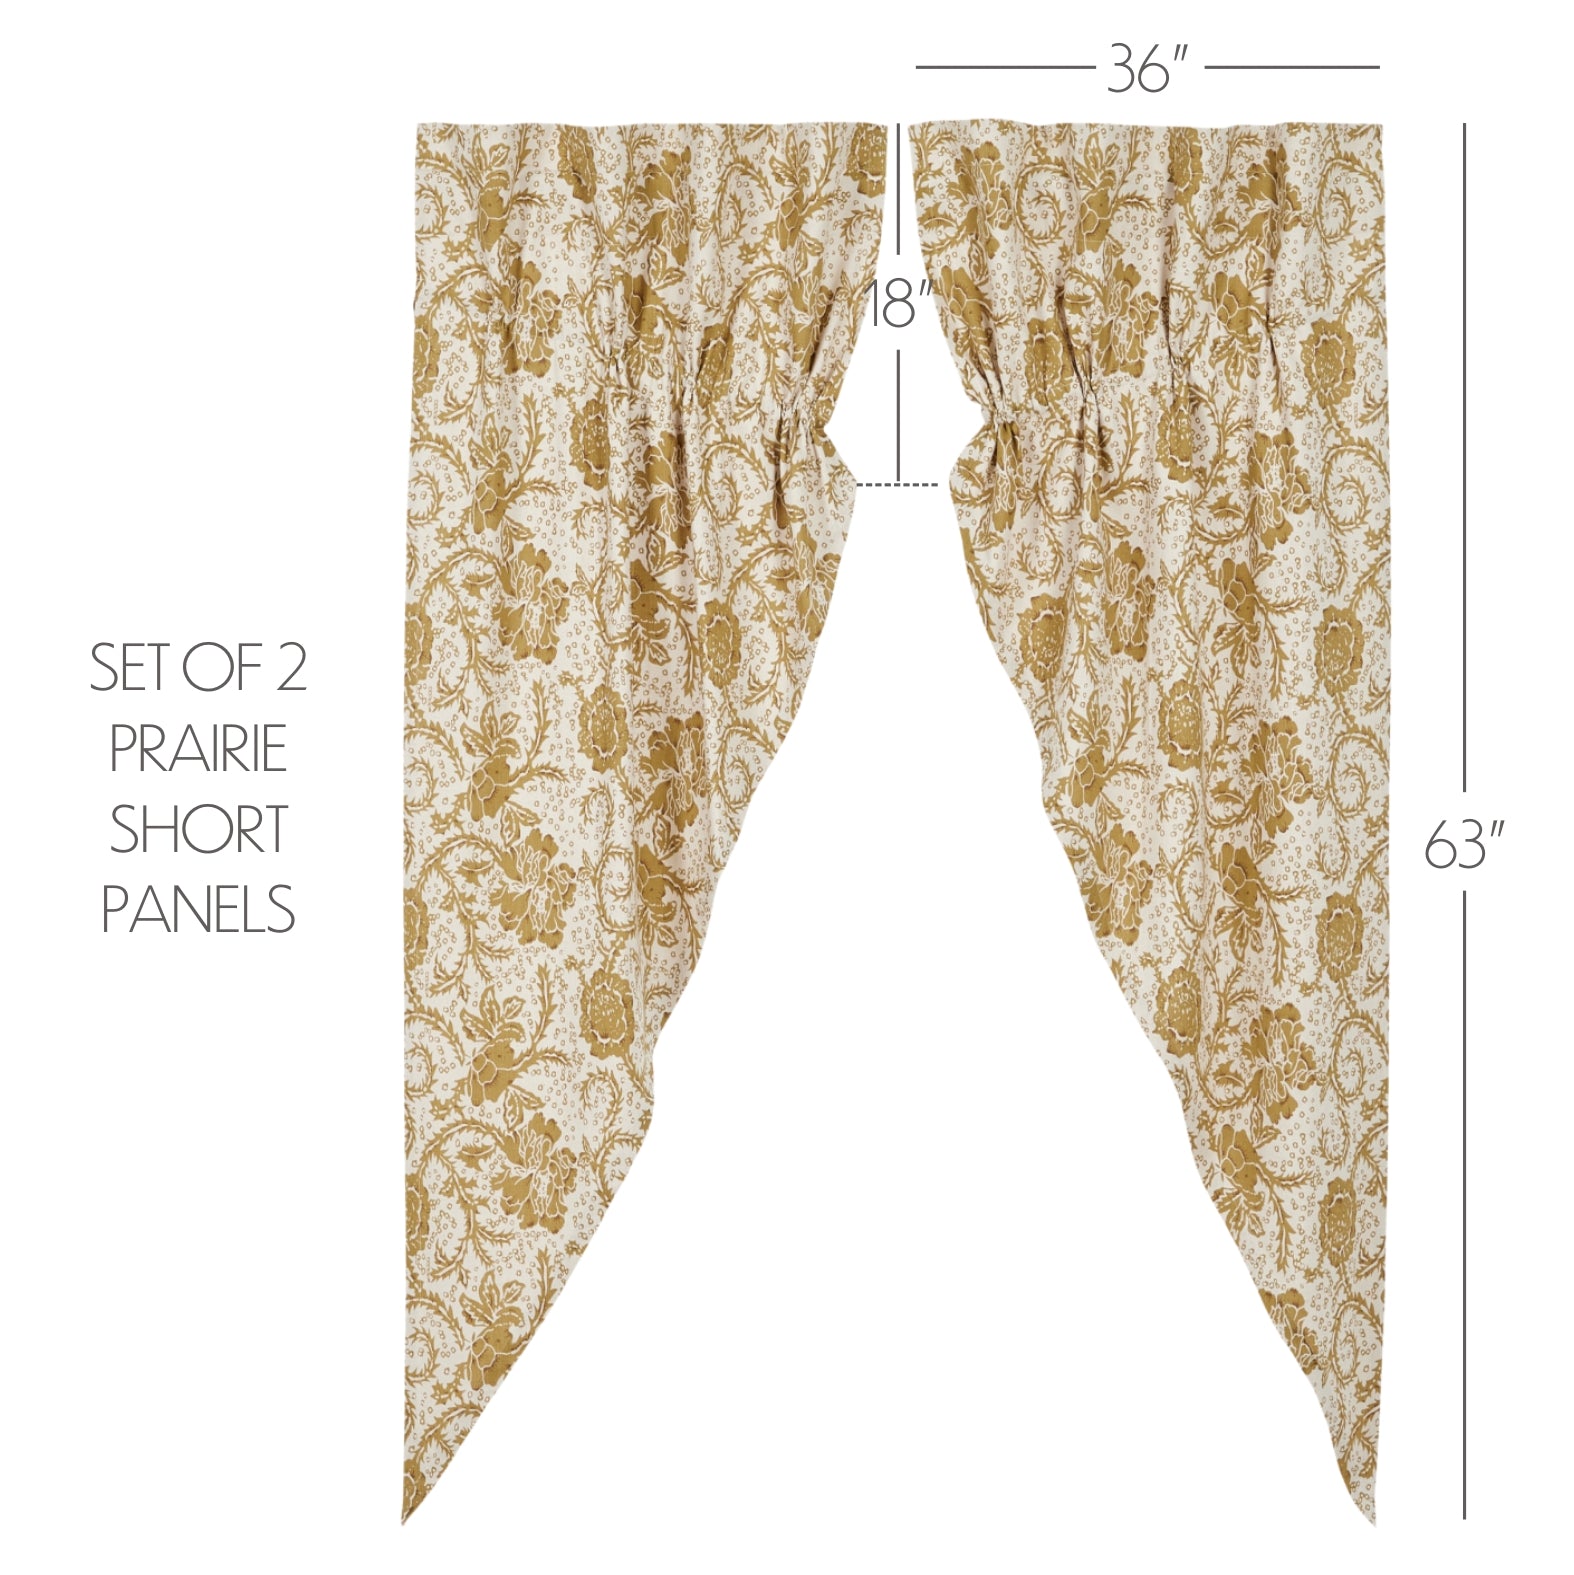 81202-Dorset-Gold-Floral-Prairie-Short-Panel-Set-of-2-63x36x18-image-1